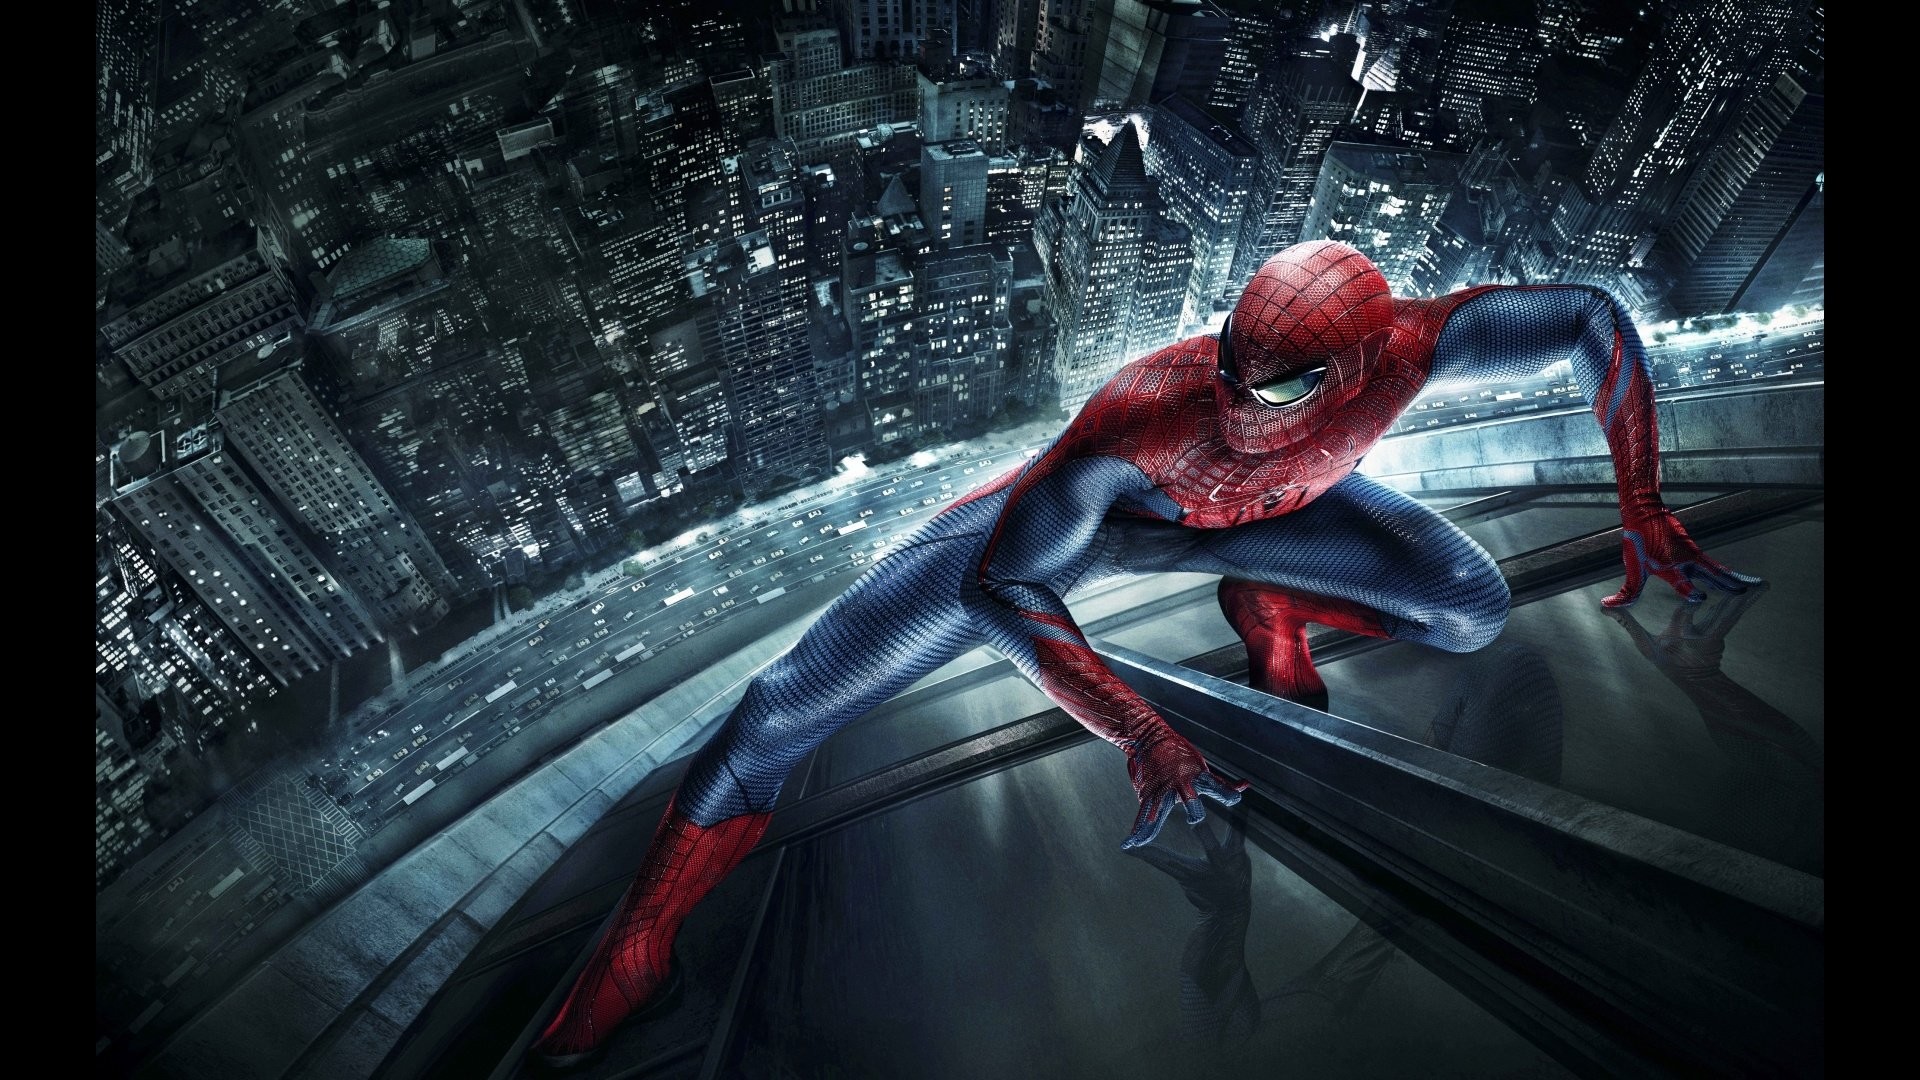 1920x1080 Best 25+ Spiderman hd ideas on Pinterest | Avengers hd, Andrew Garfield sin  camisa and Amazing spiderman